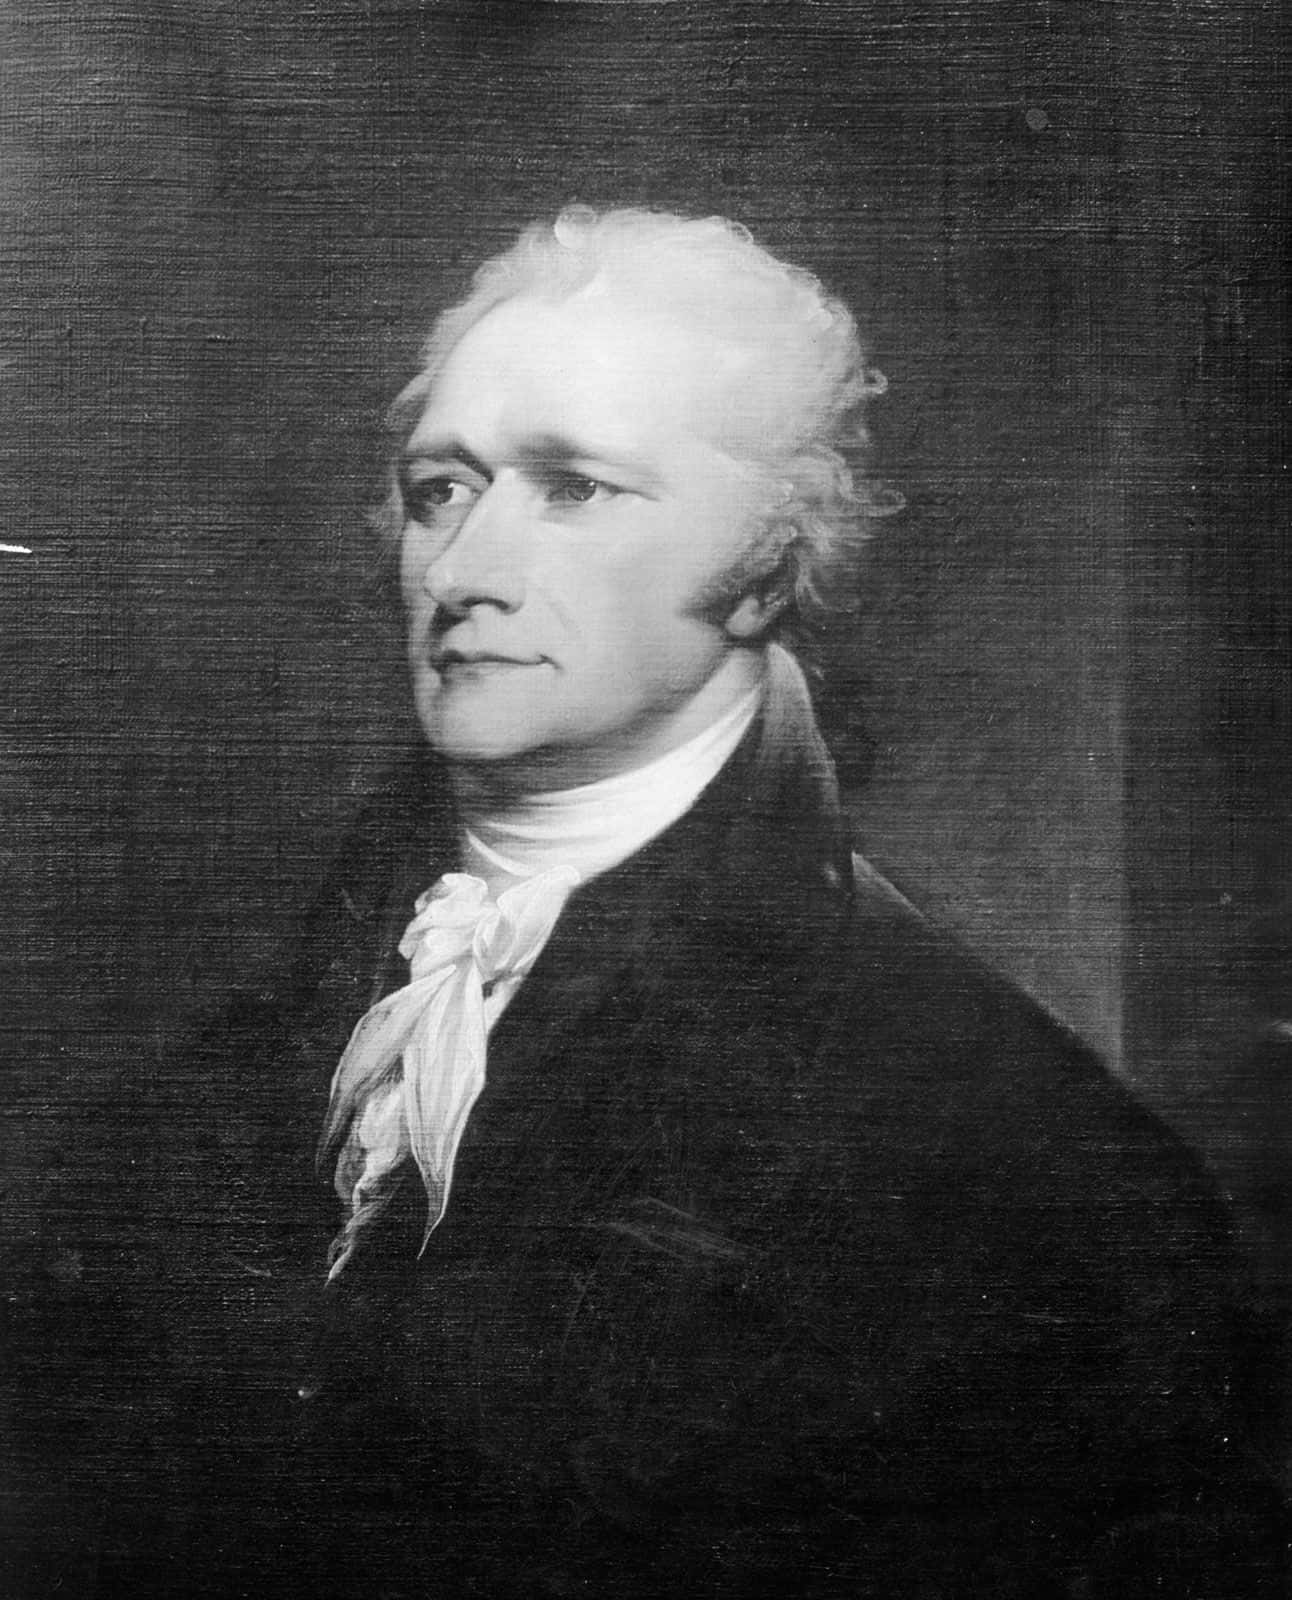 Alexander Hamilton, the first US Secretary of the Treasury